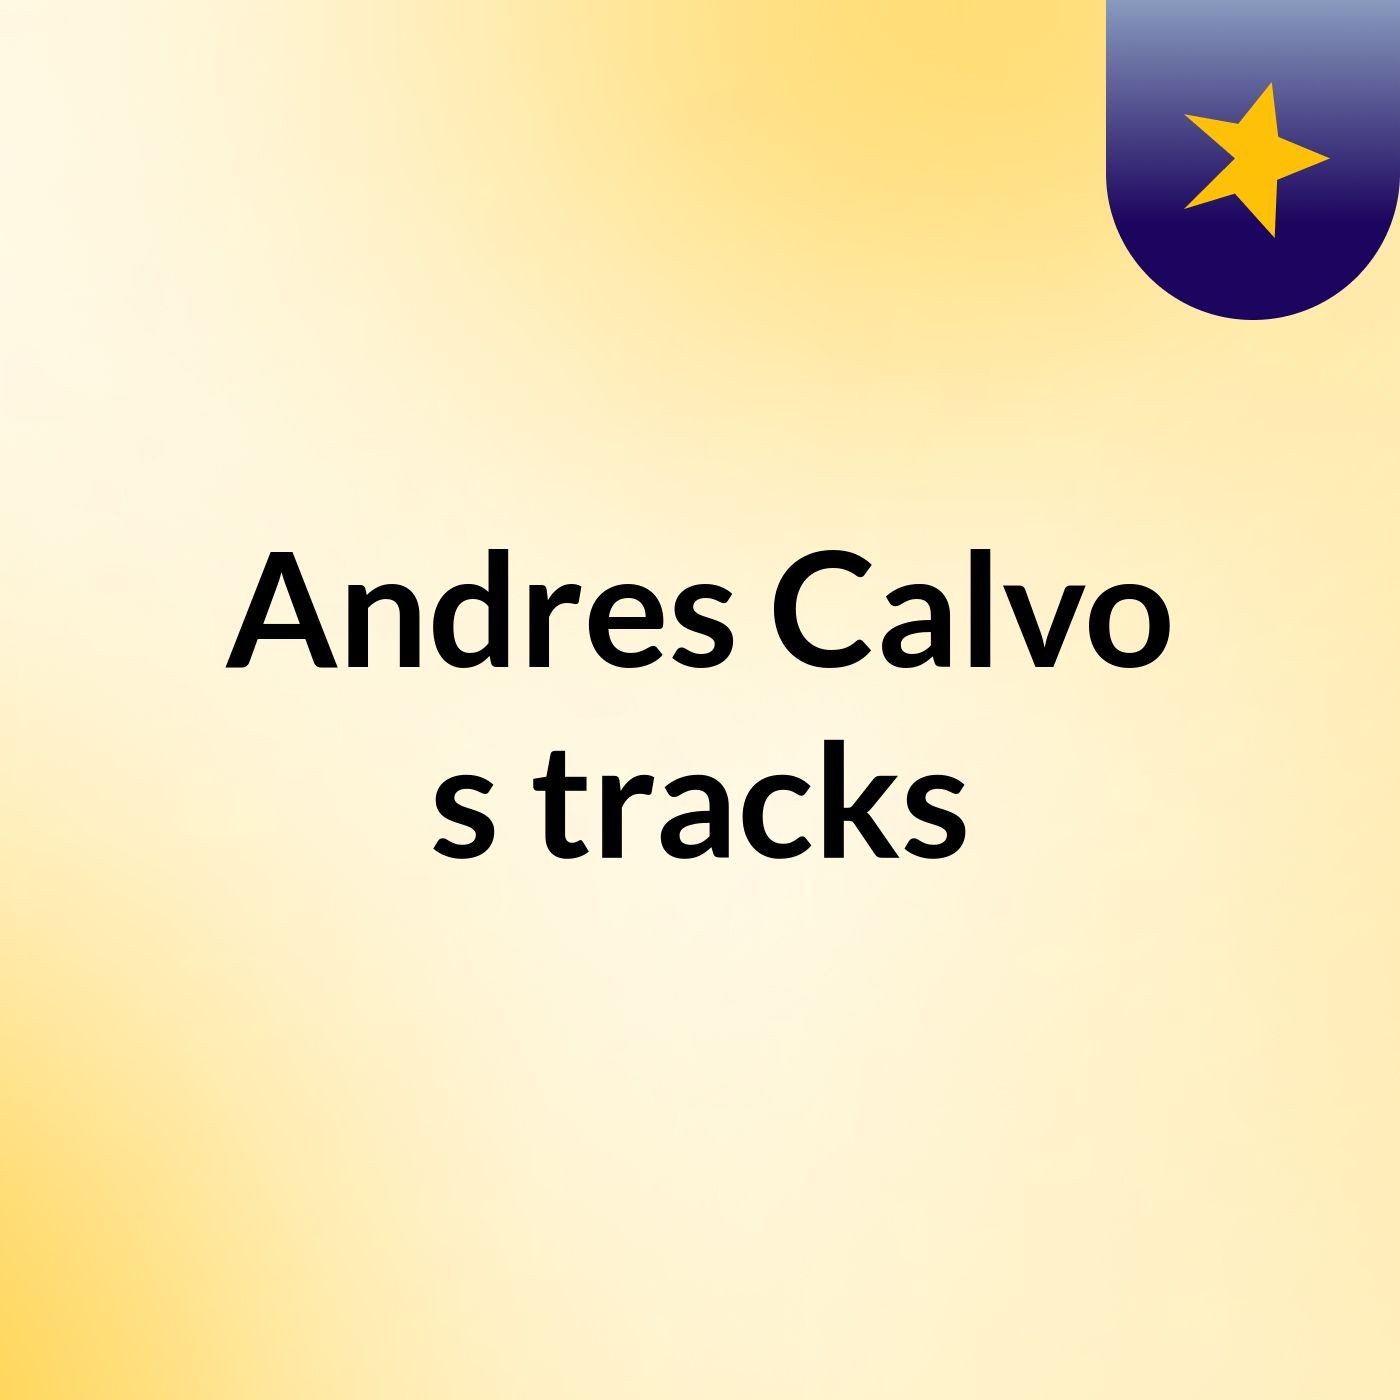 Andres Calvo's tracks